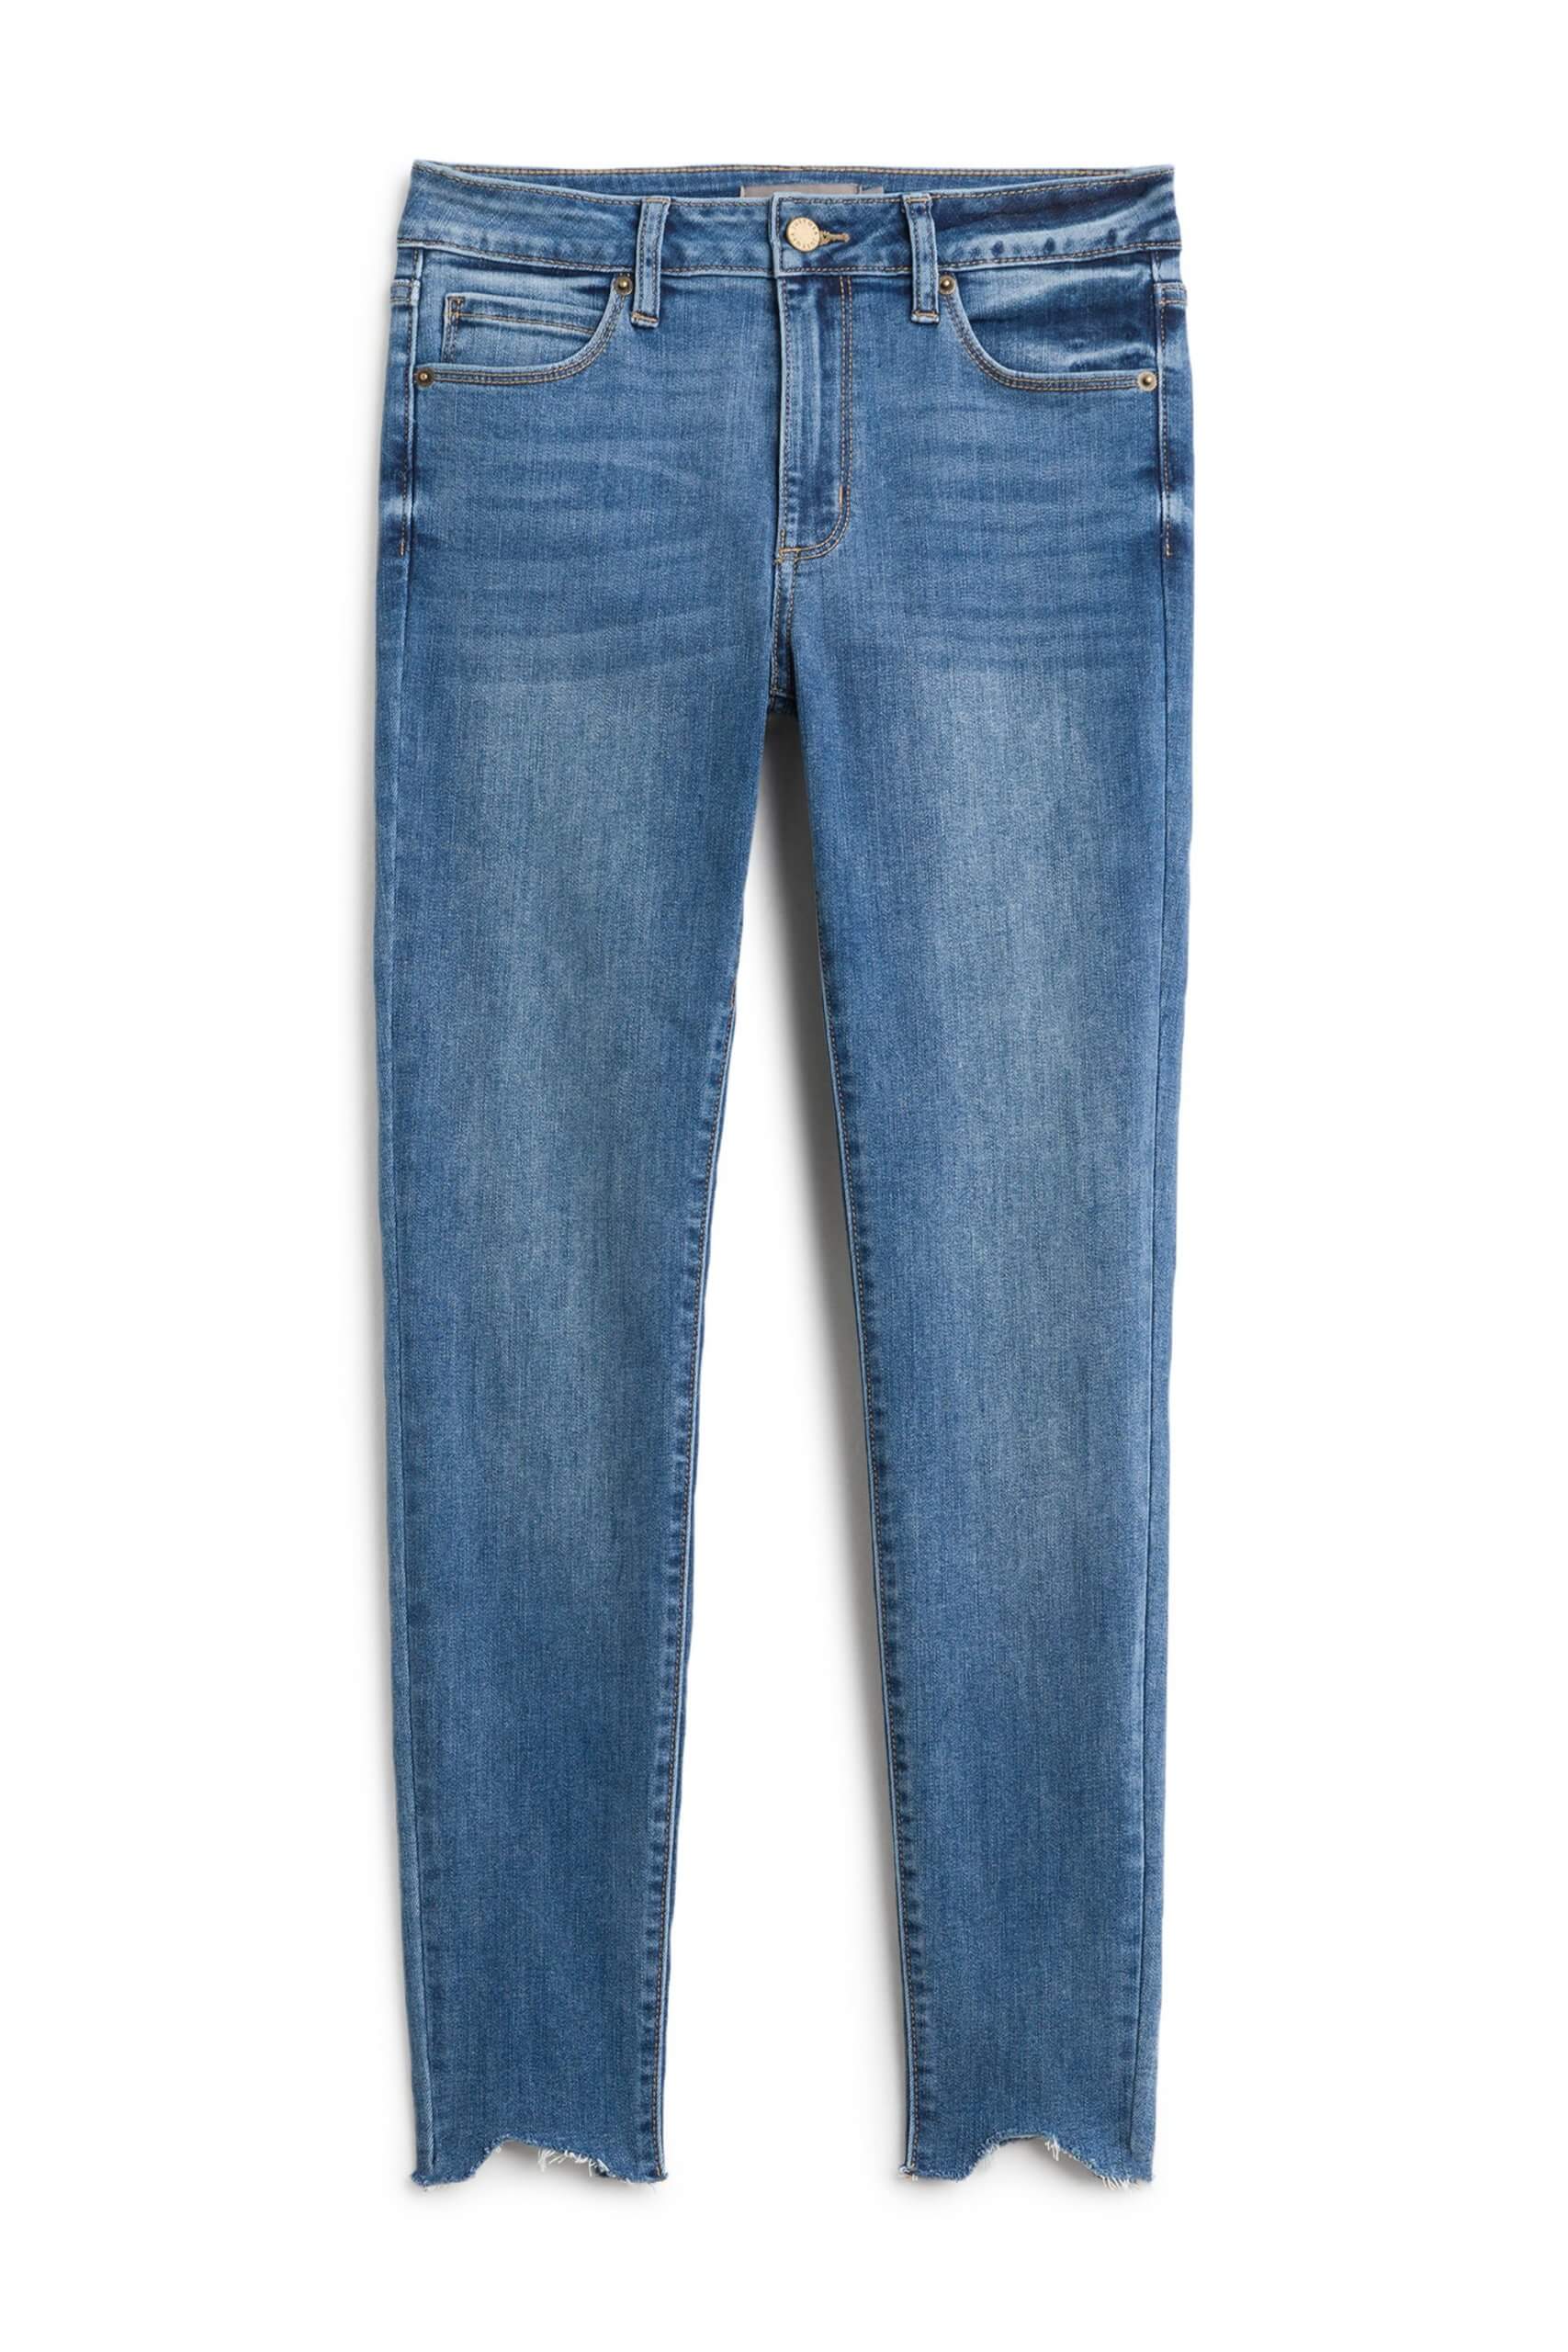 Stitch Fix Women's blue skinny jeans.